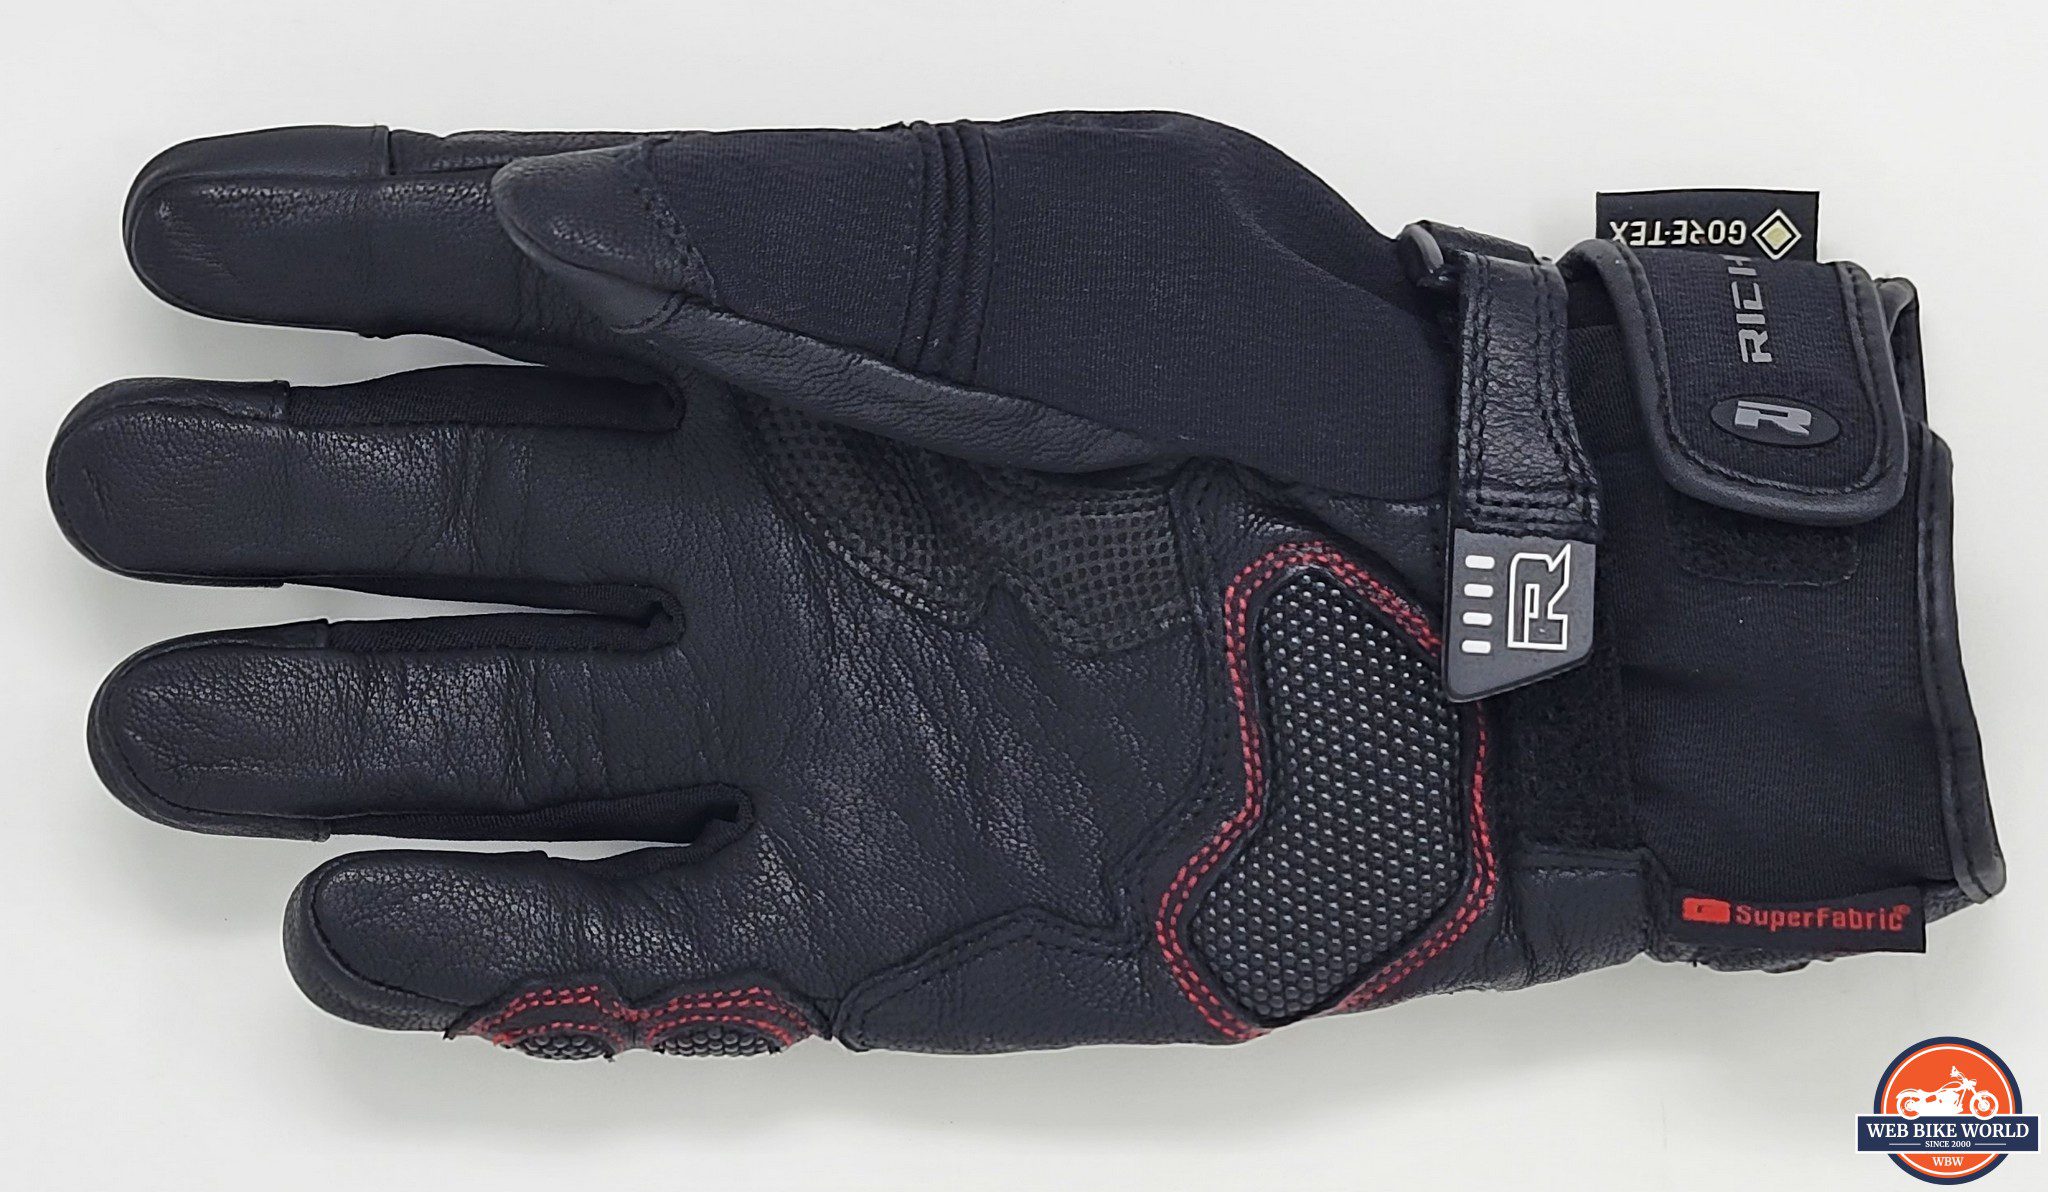 Palm view of the Richa Atlantic GTX gloves